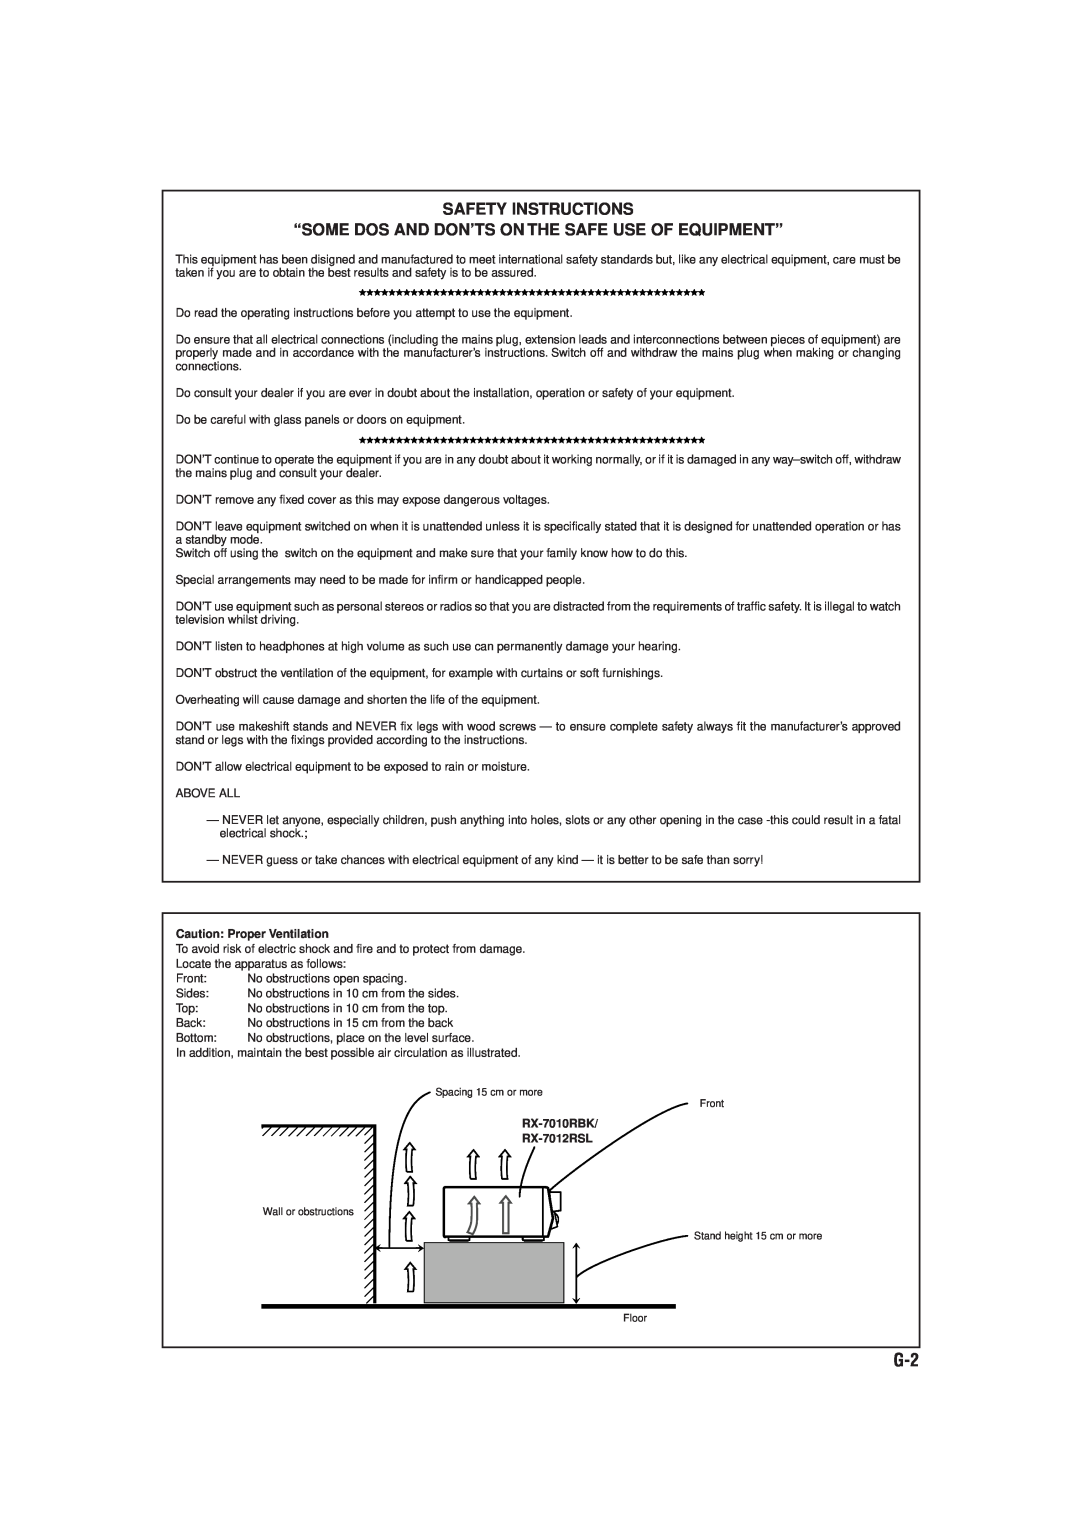 JVC manual Safety Instructions, Caution Proper Ventilation, RX-7010RBK RX-7012RSL 